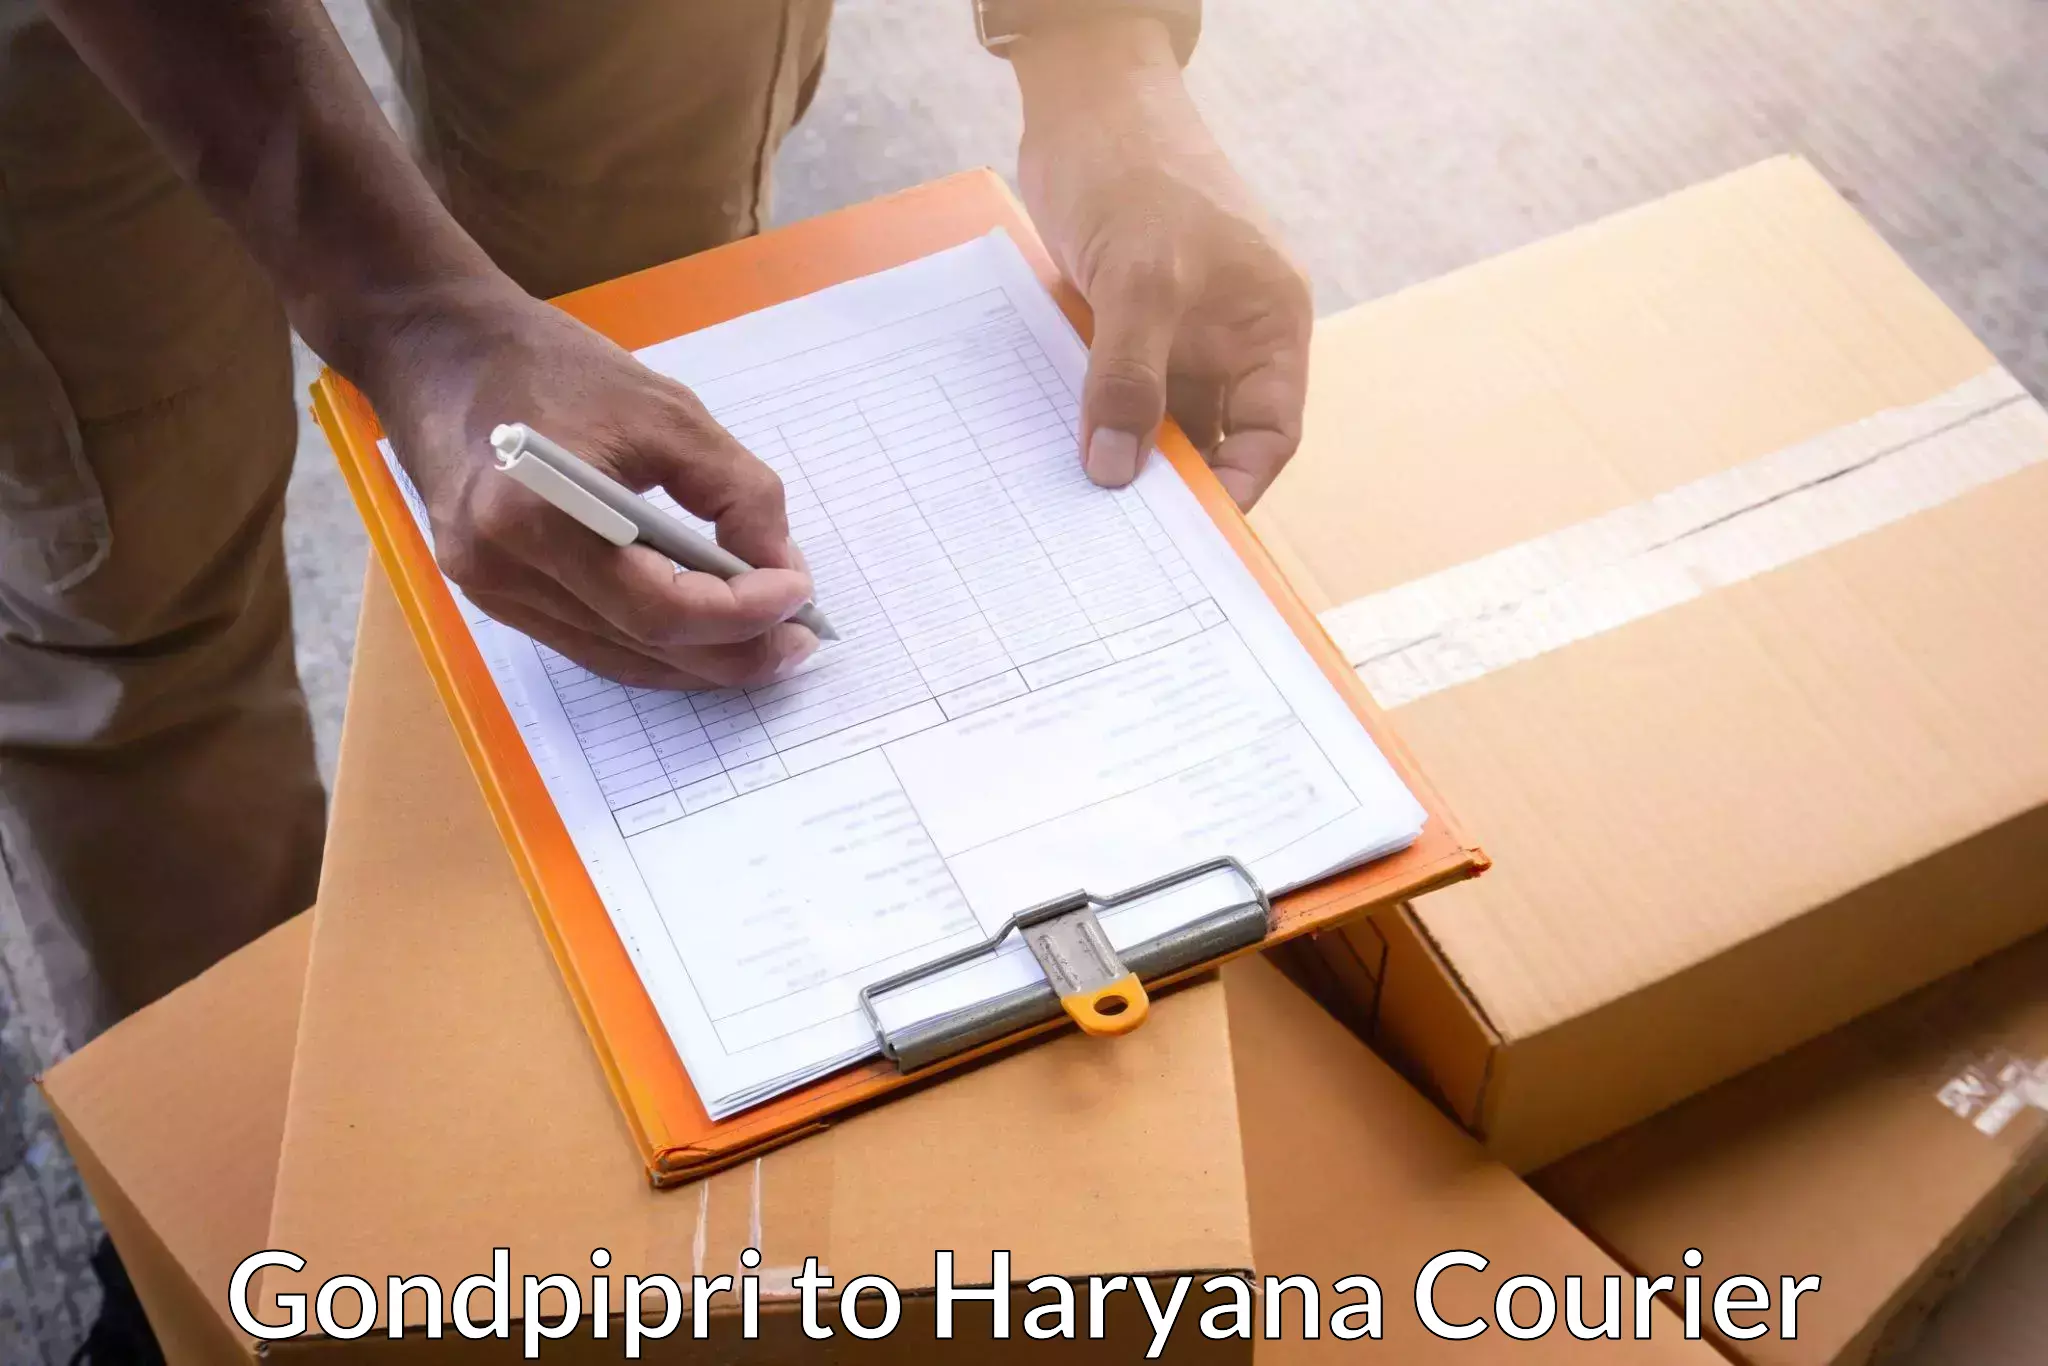 Efficient cargo handling Gondpipri to Chirya